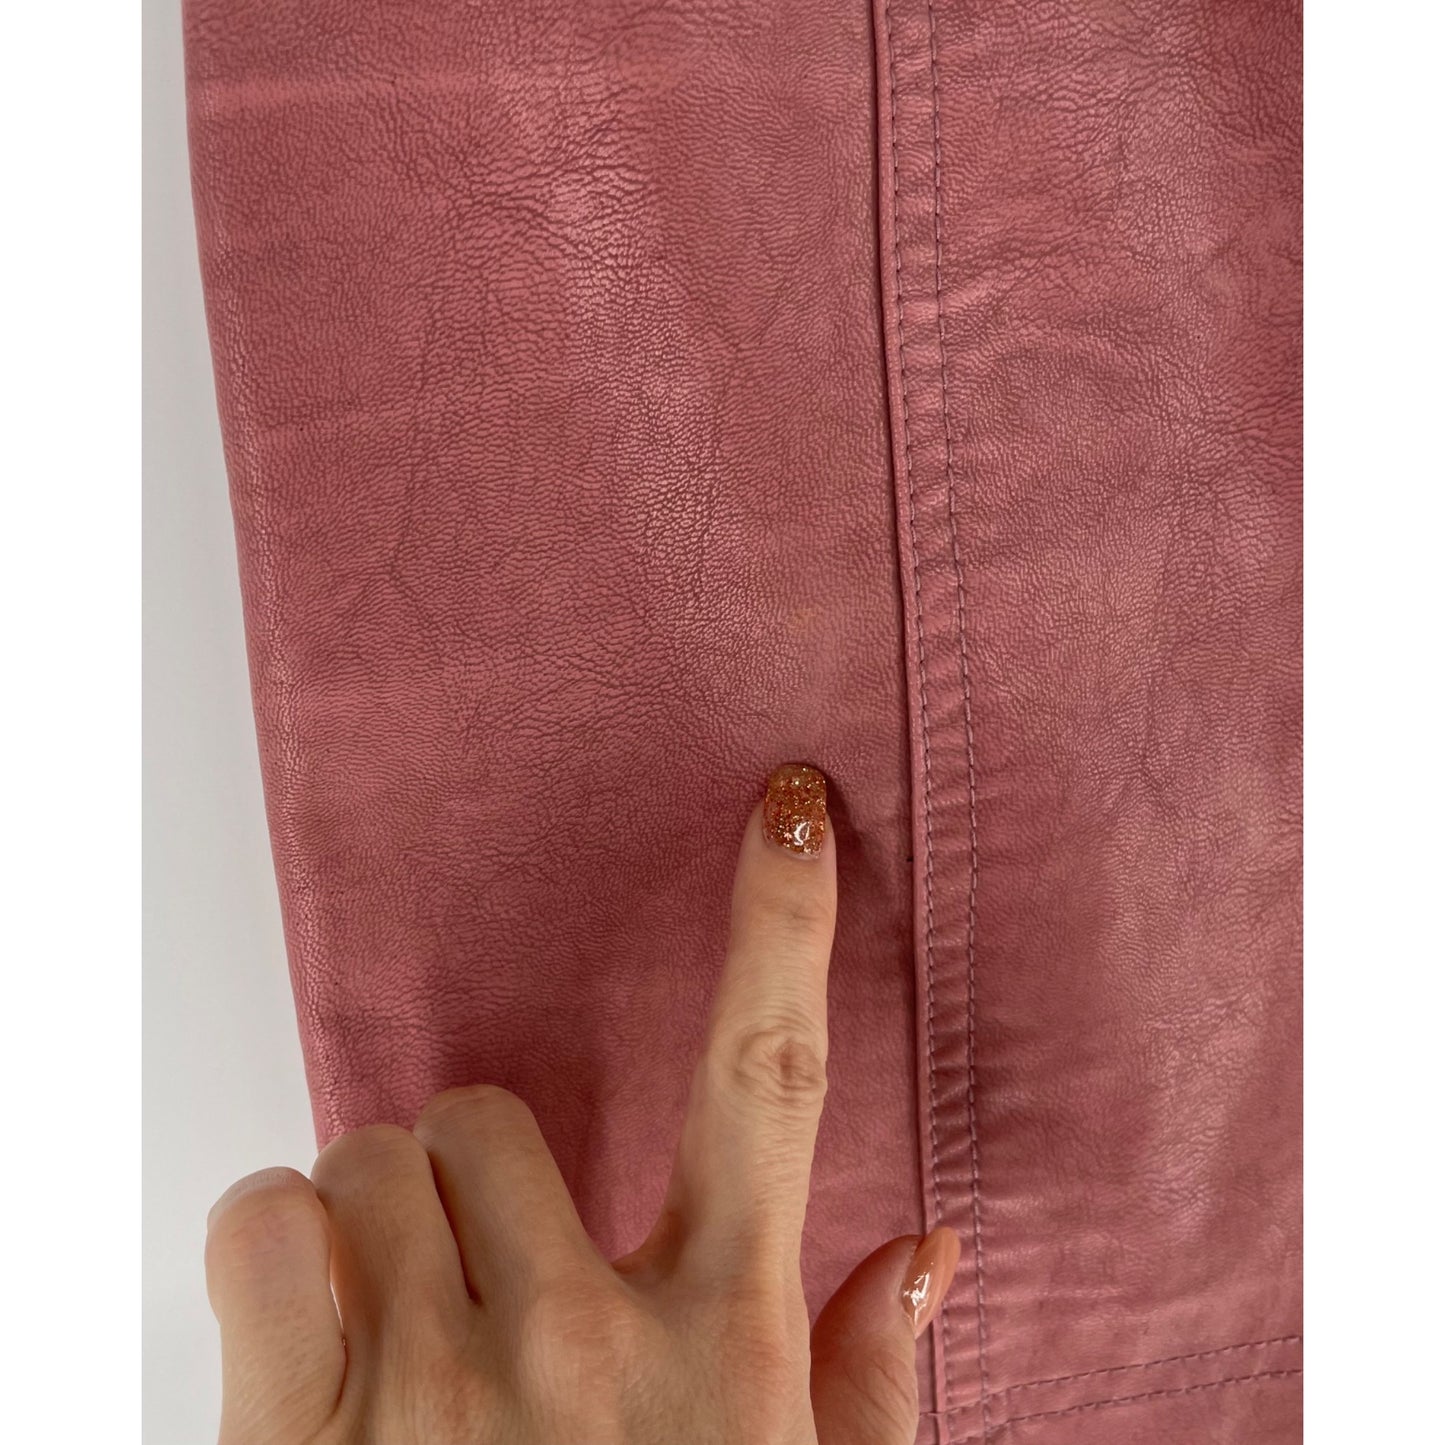 Free People Women's Size 2 Pink/Mauve Faux Leather Mini Skirt